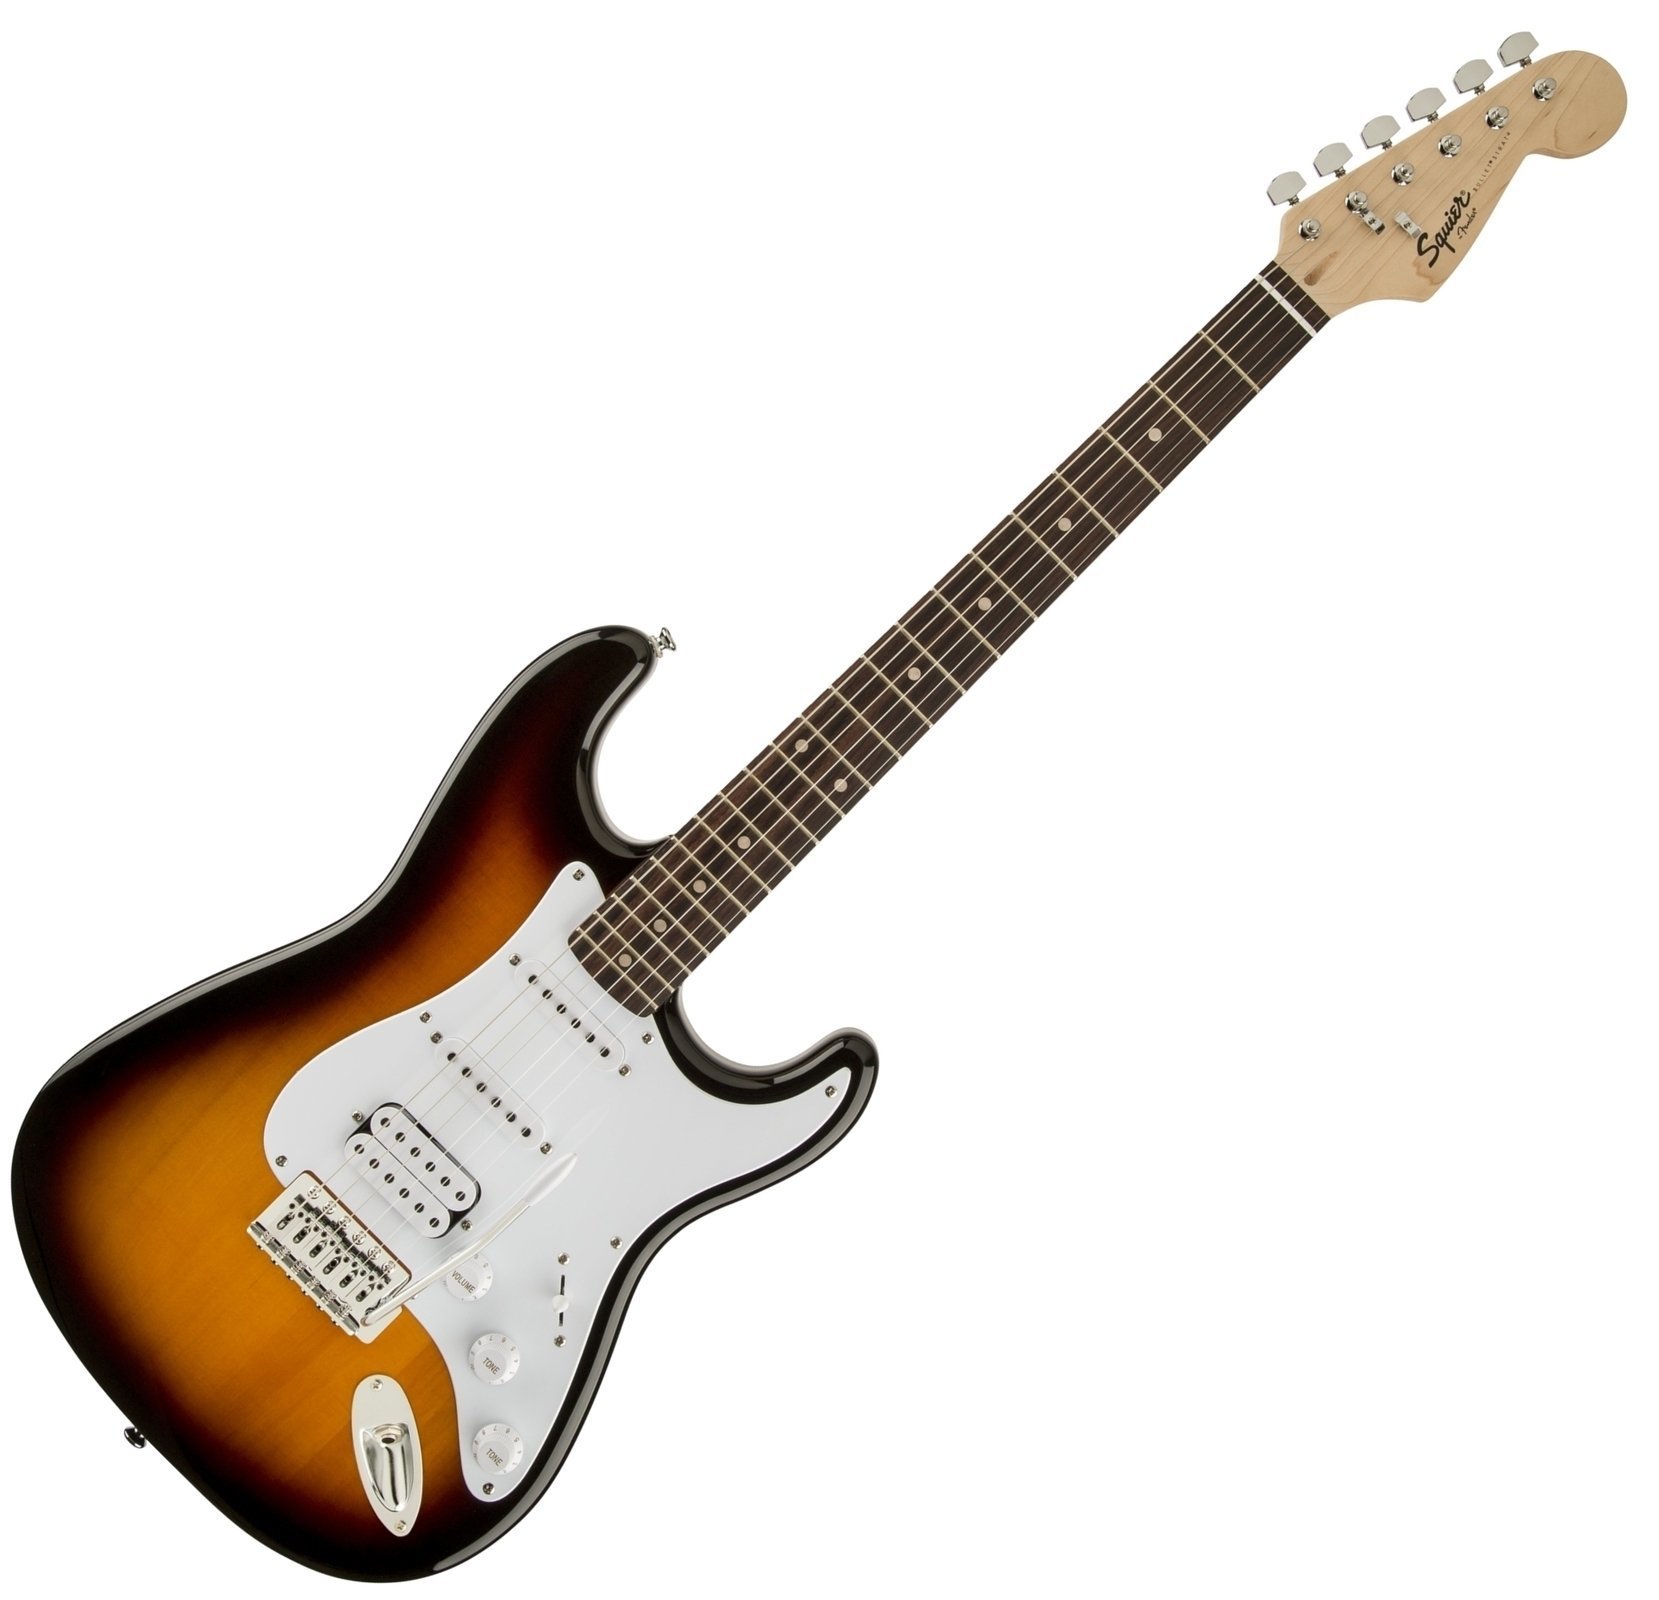 Electric guitar Fender Squier Bullet Stratocaster Tremolo HSS IL Brown Sunburst